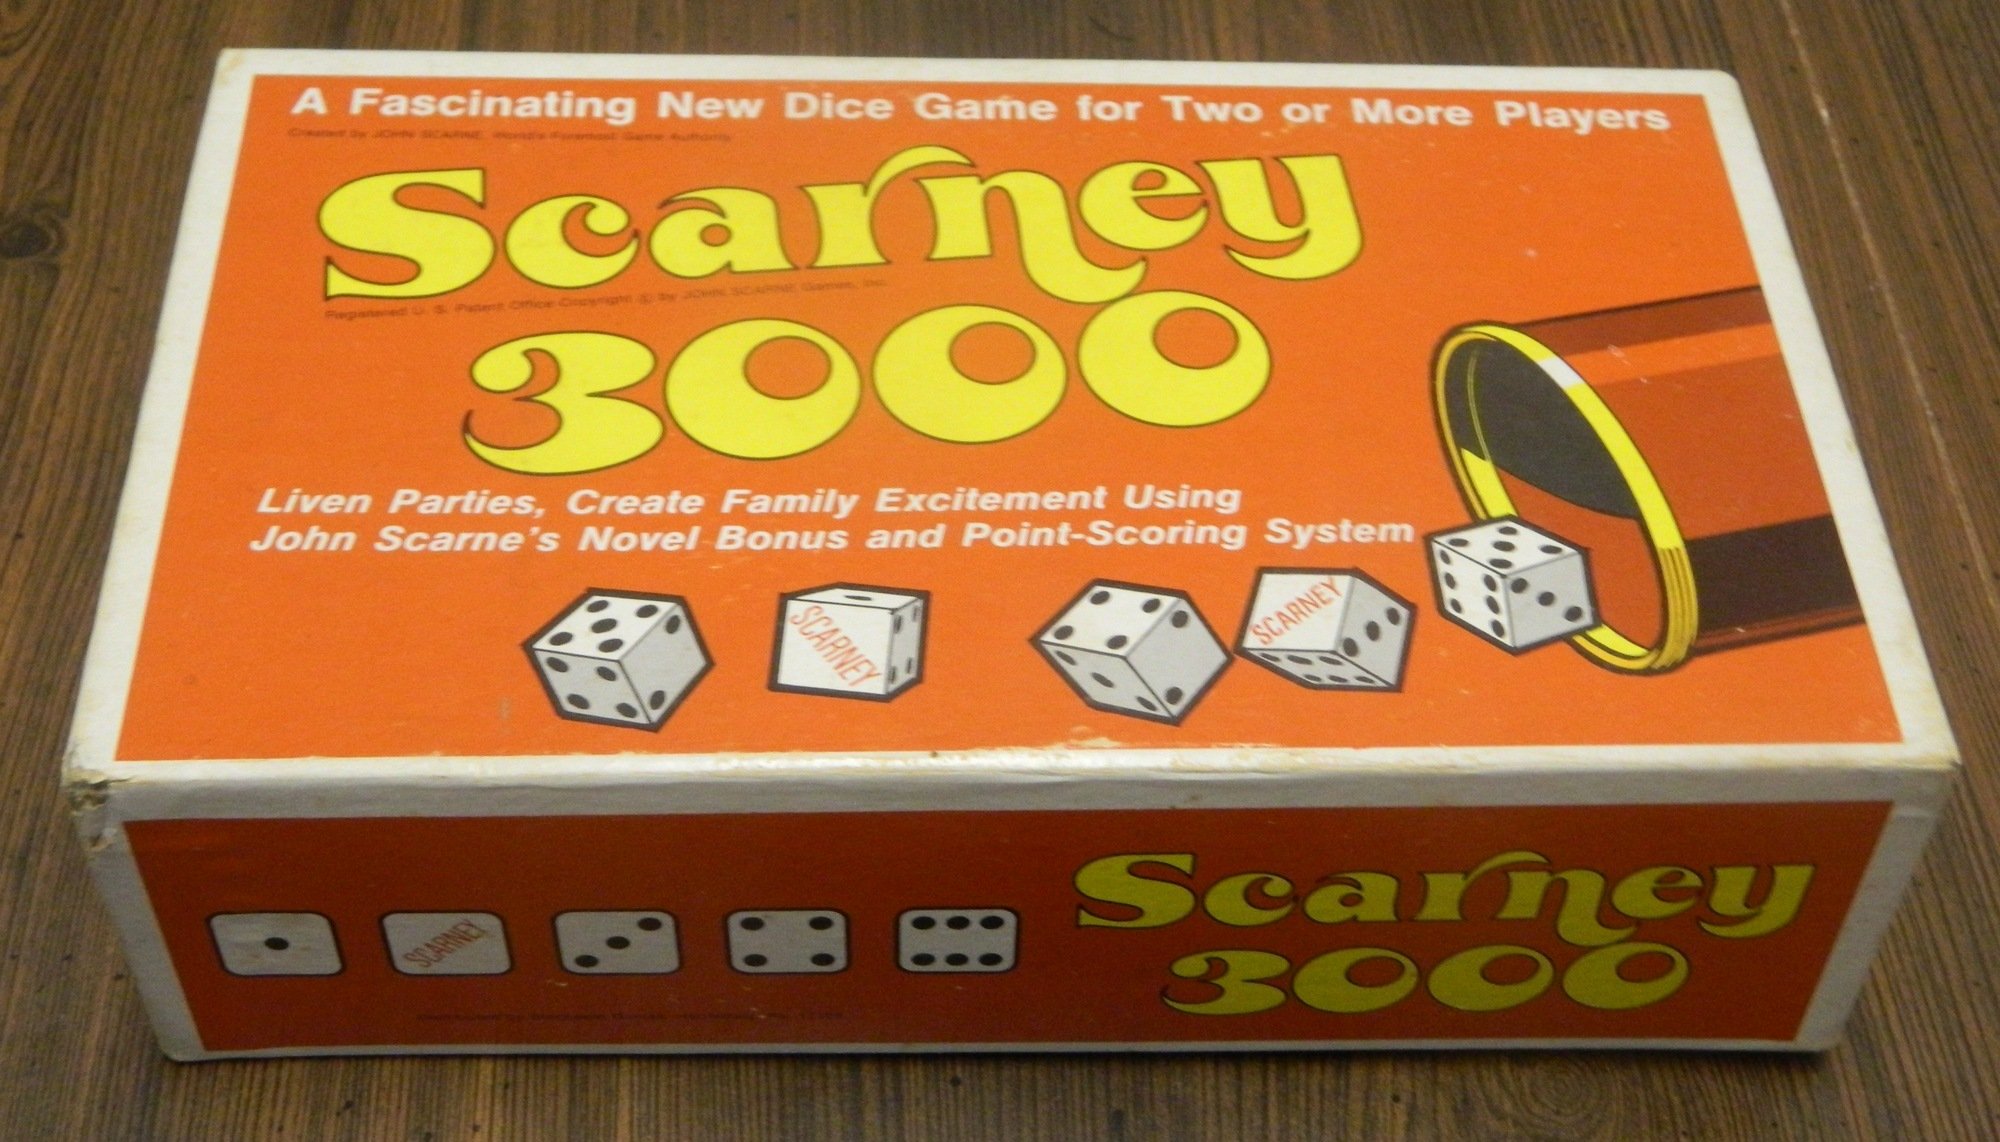 Scarney 3000 Box